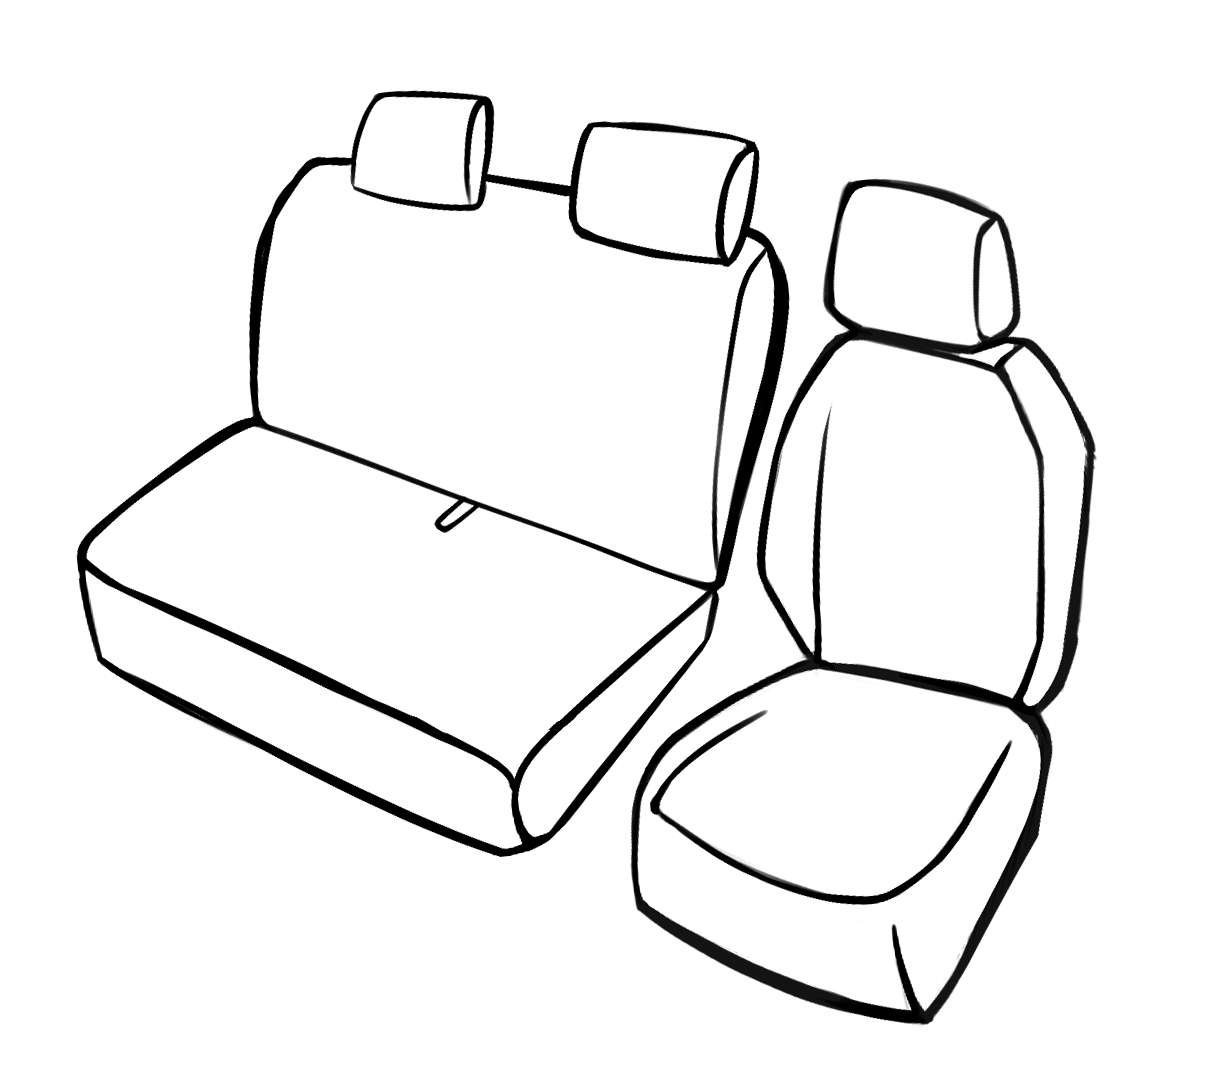 Housse de siège Transporter en simili cuir pour Renault Trafic II, Opel Vivaro, Nissan Primastar, siège simple et double